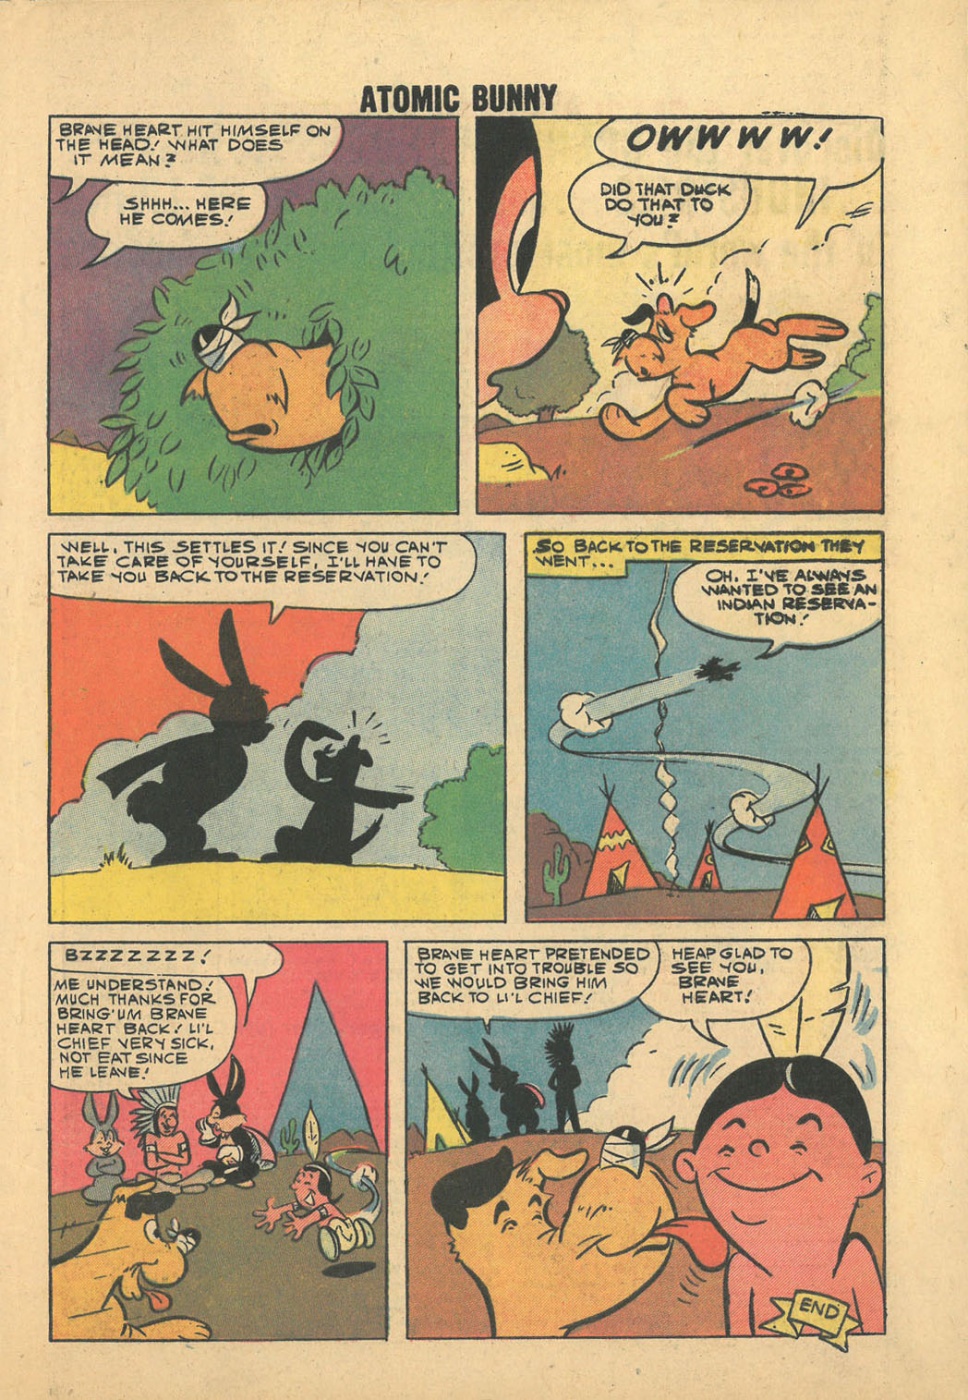 Atomic-Bunny-Comic-Strips (b) (32)